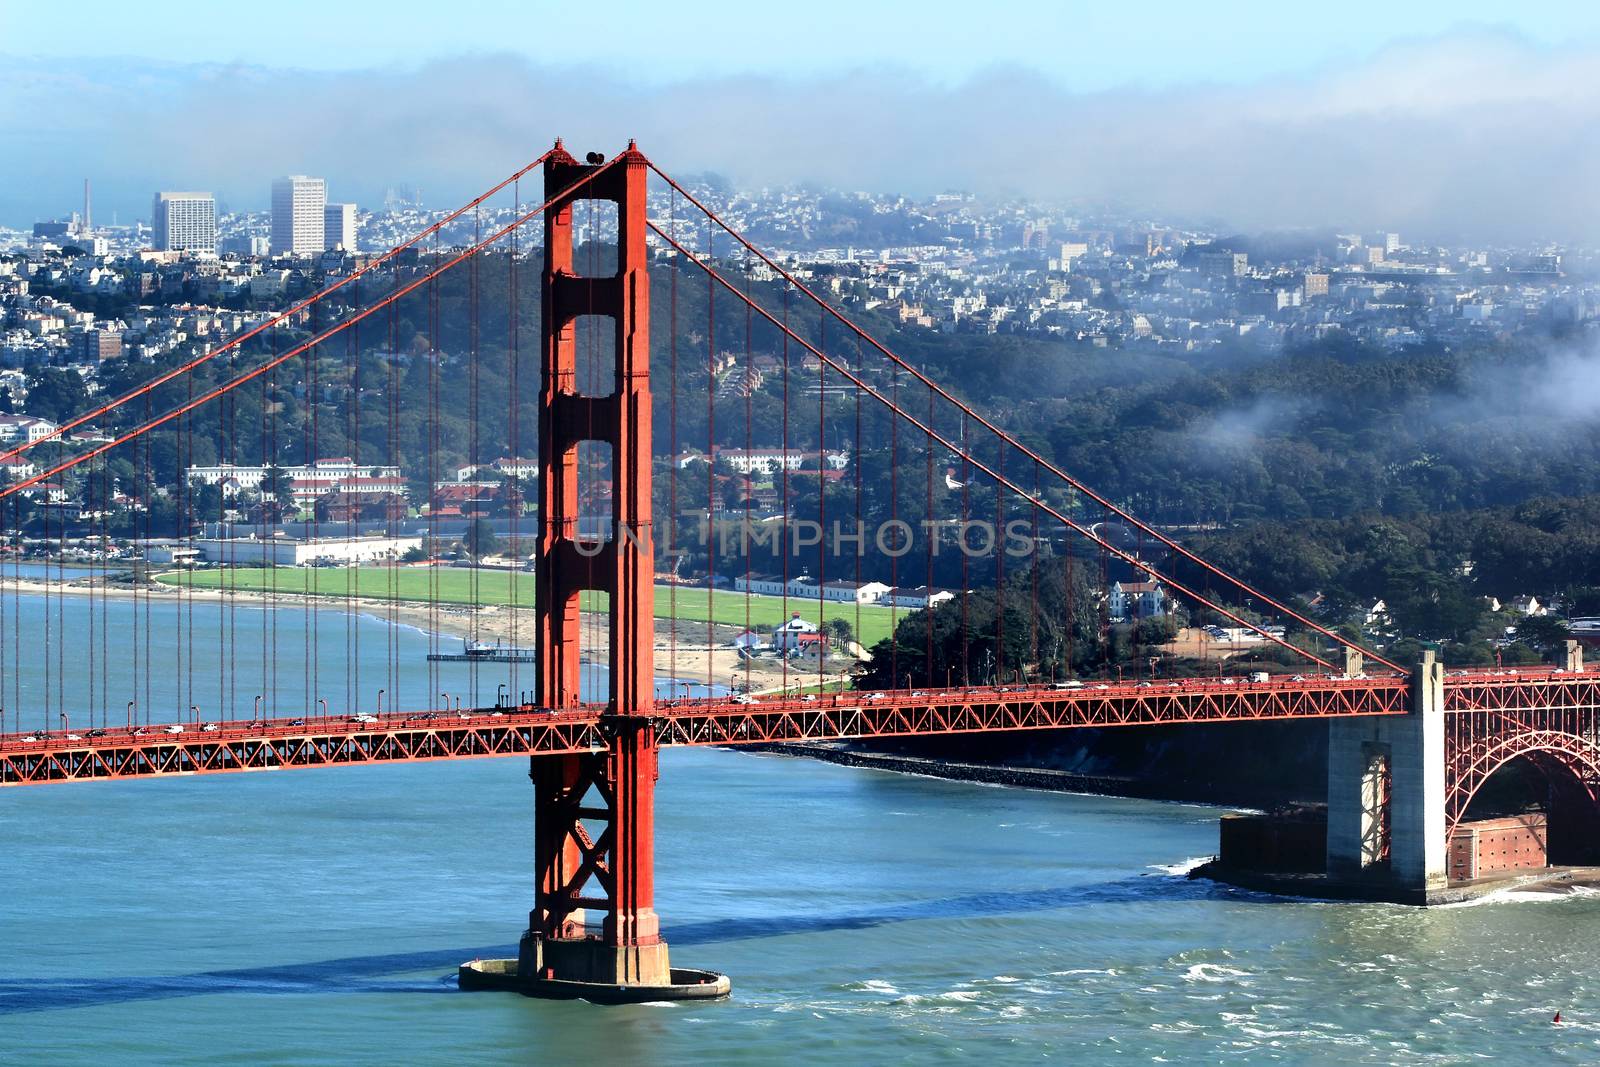 Golden Gate Bridge and San Francisco Bay, seen from Marin Headlands.